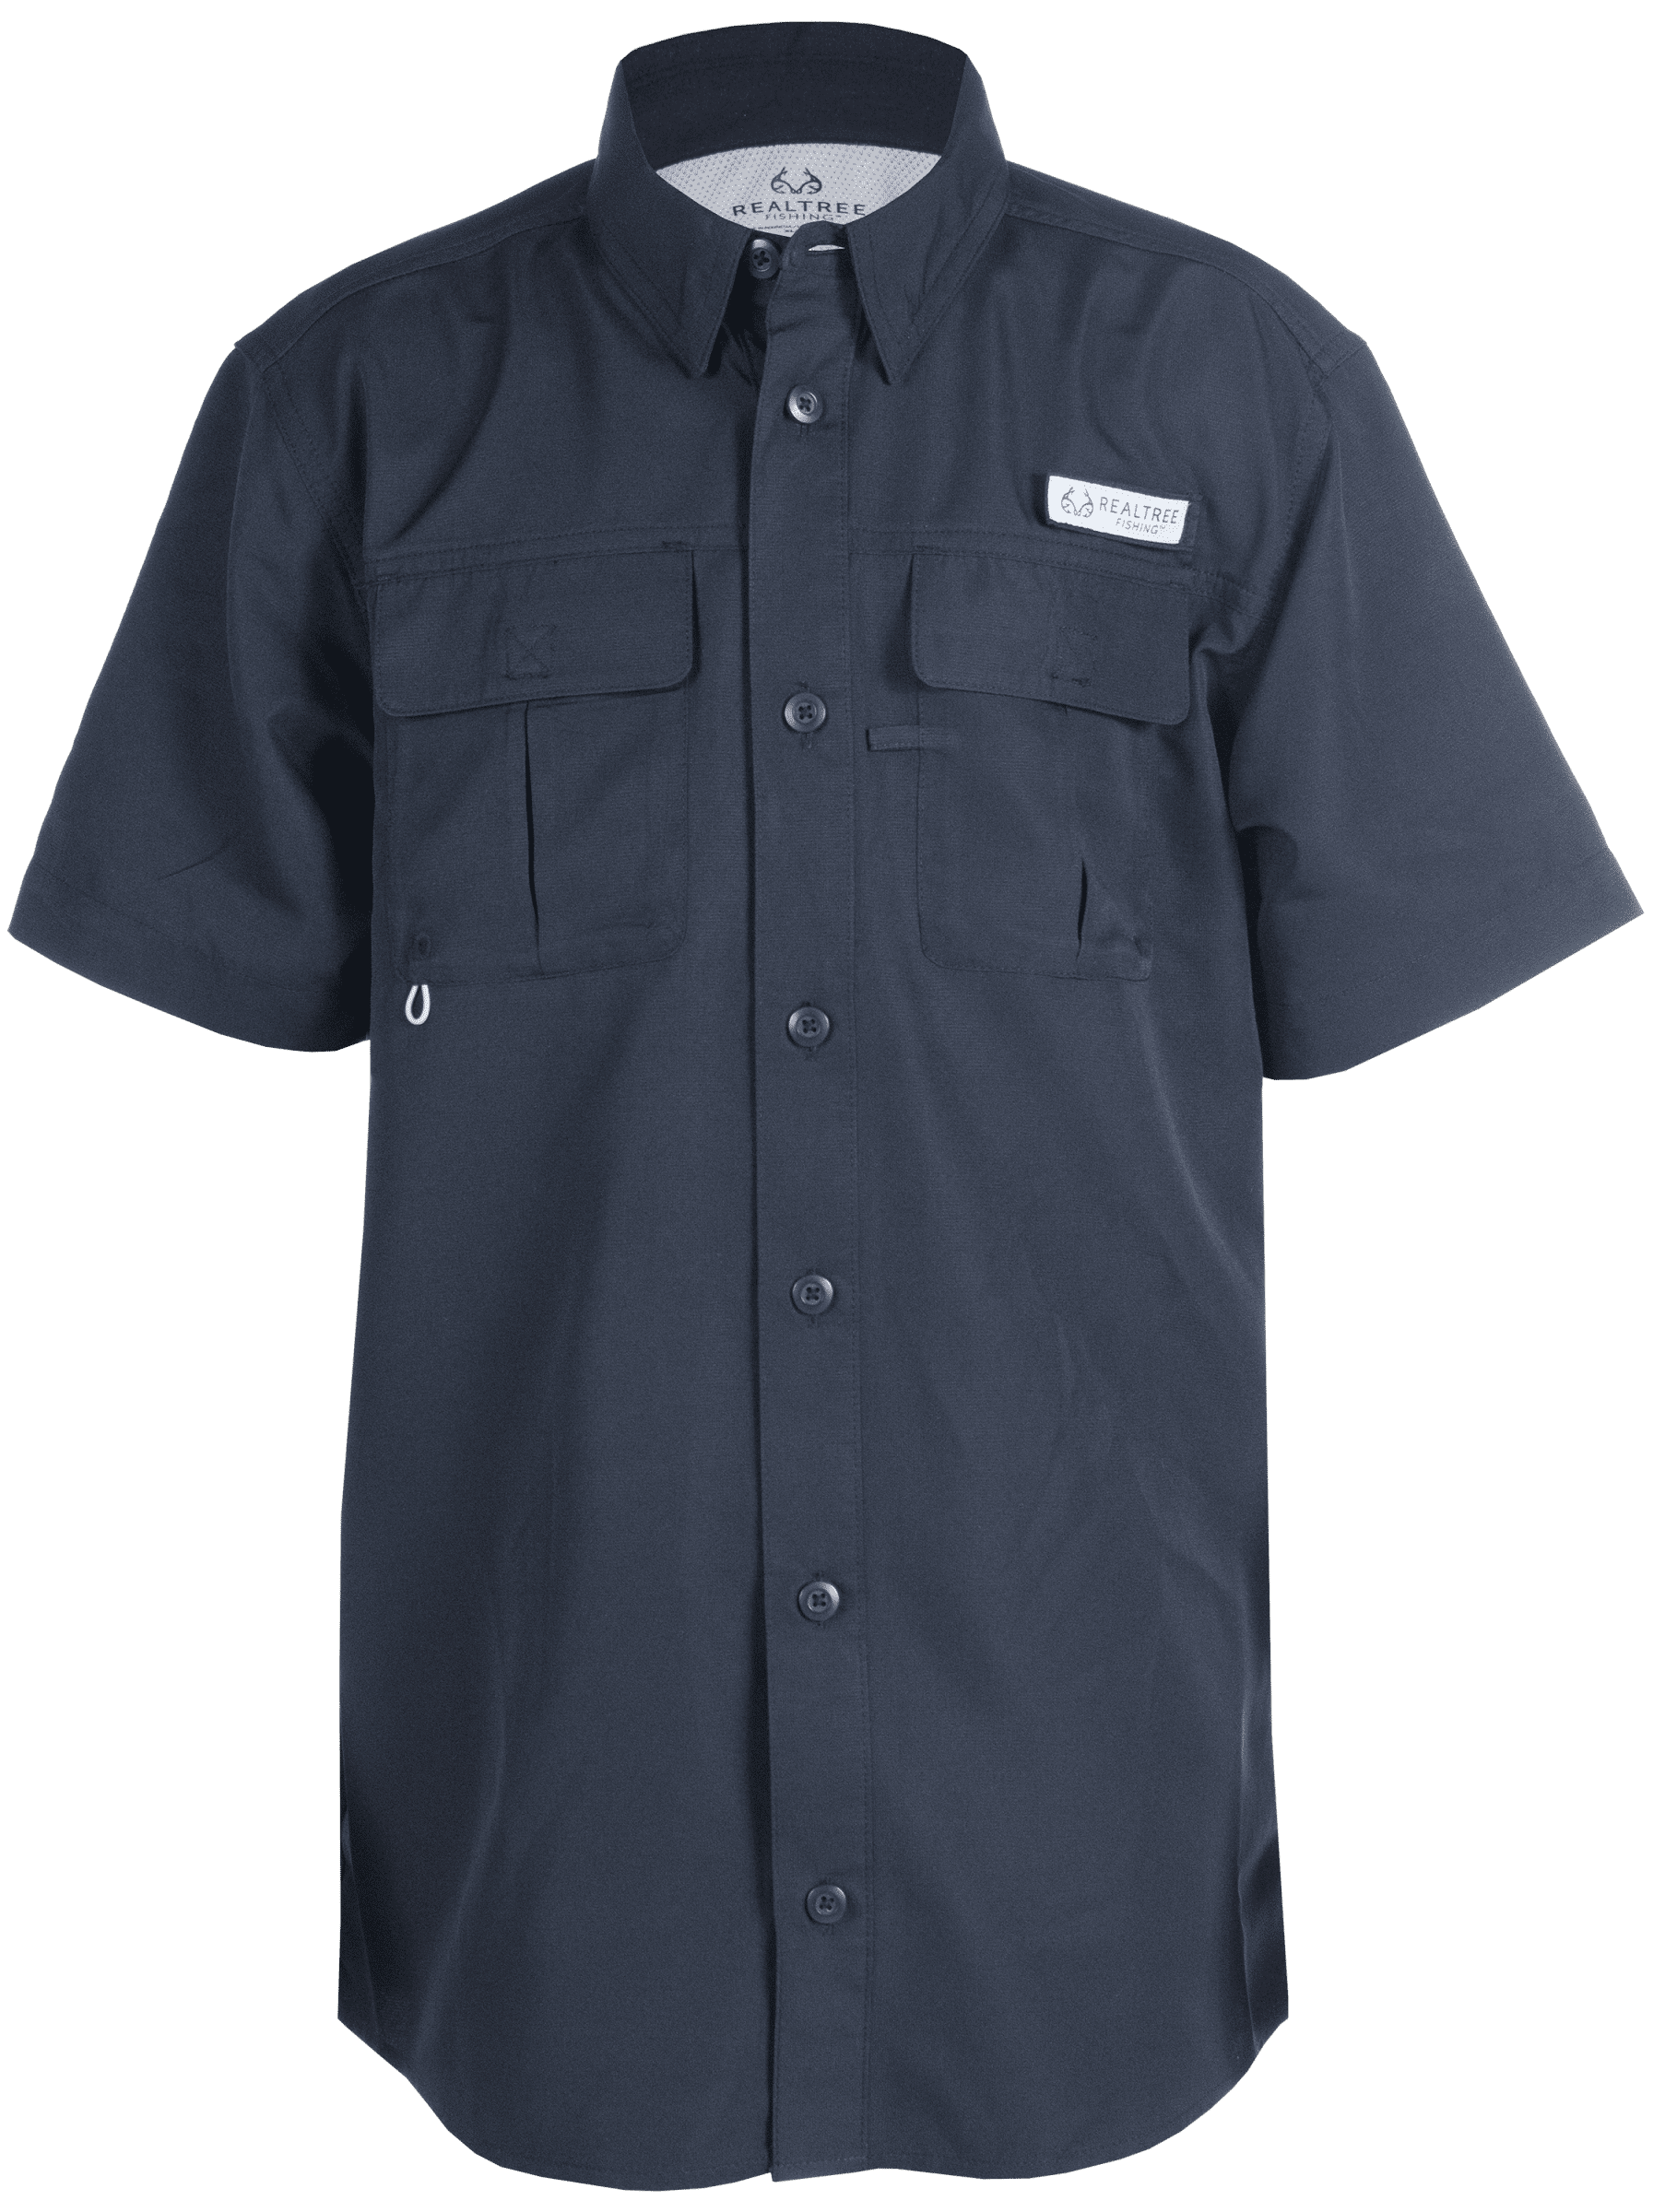 Realtree Workwear Uniform Short Sleeve Shirt (Men's), 1 Count, 1 Pack, Size: Regular, Black